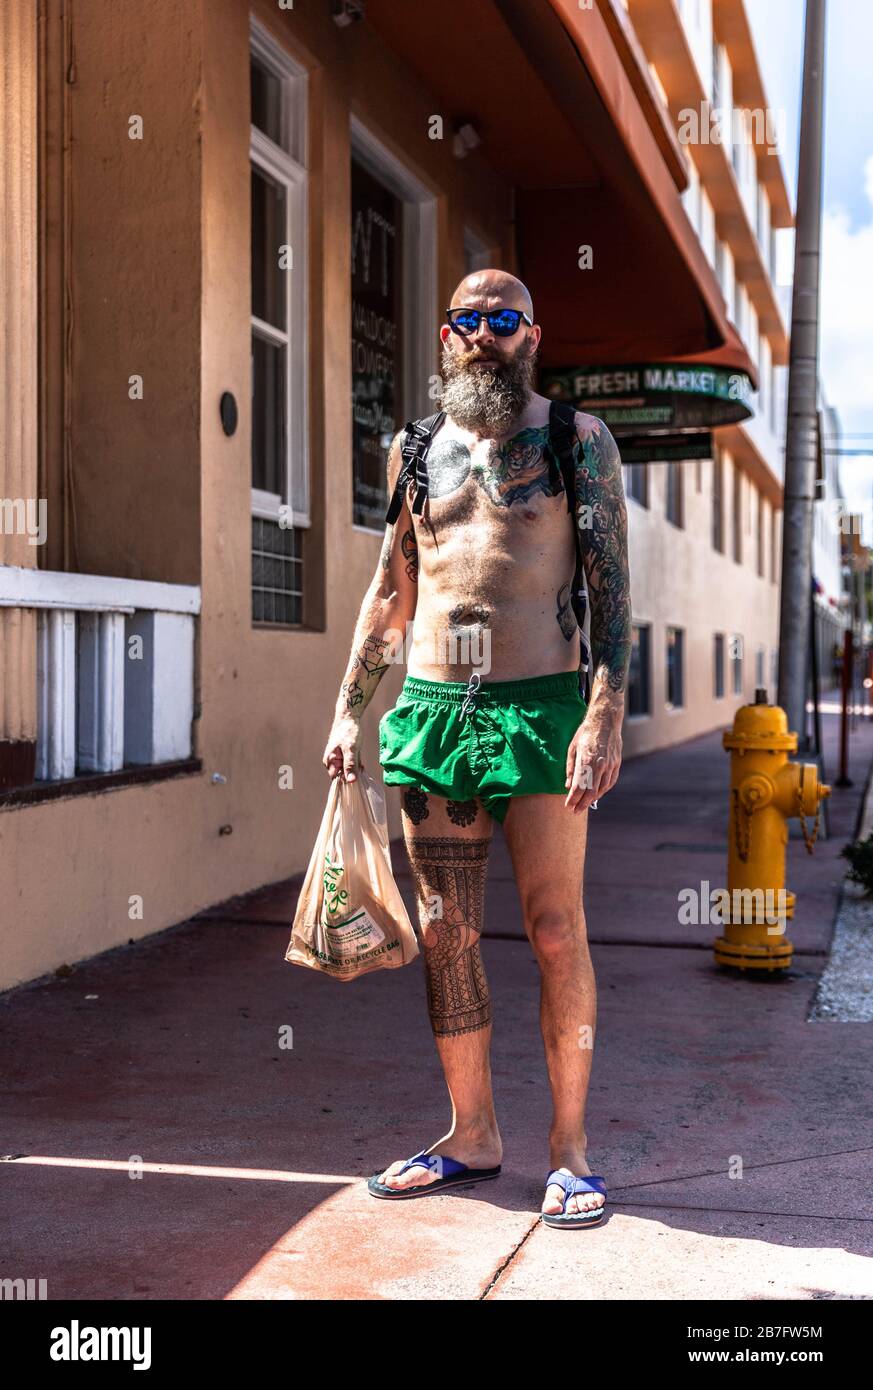 Full length portrait of a tattooed bearded man in trunks, South Beach, Miami Beach, Florida, UK. Stock Photo